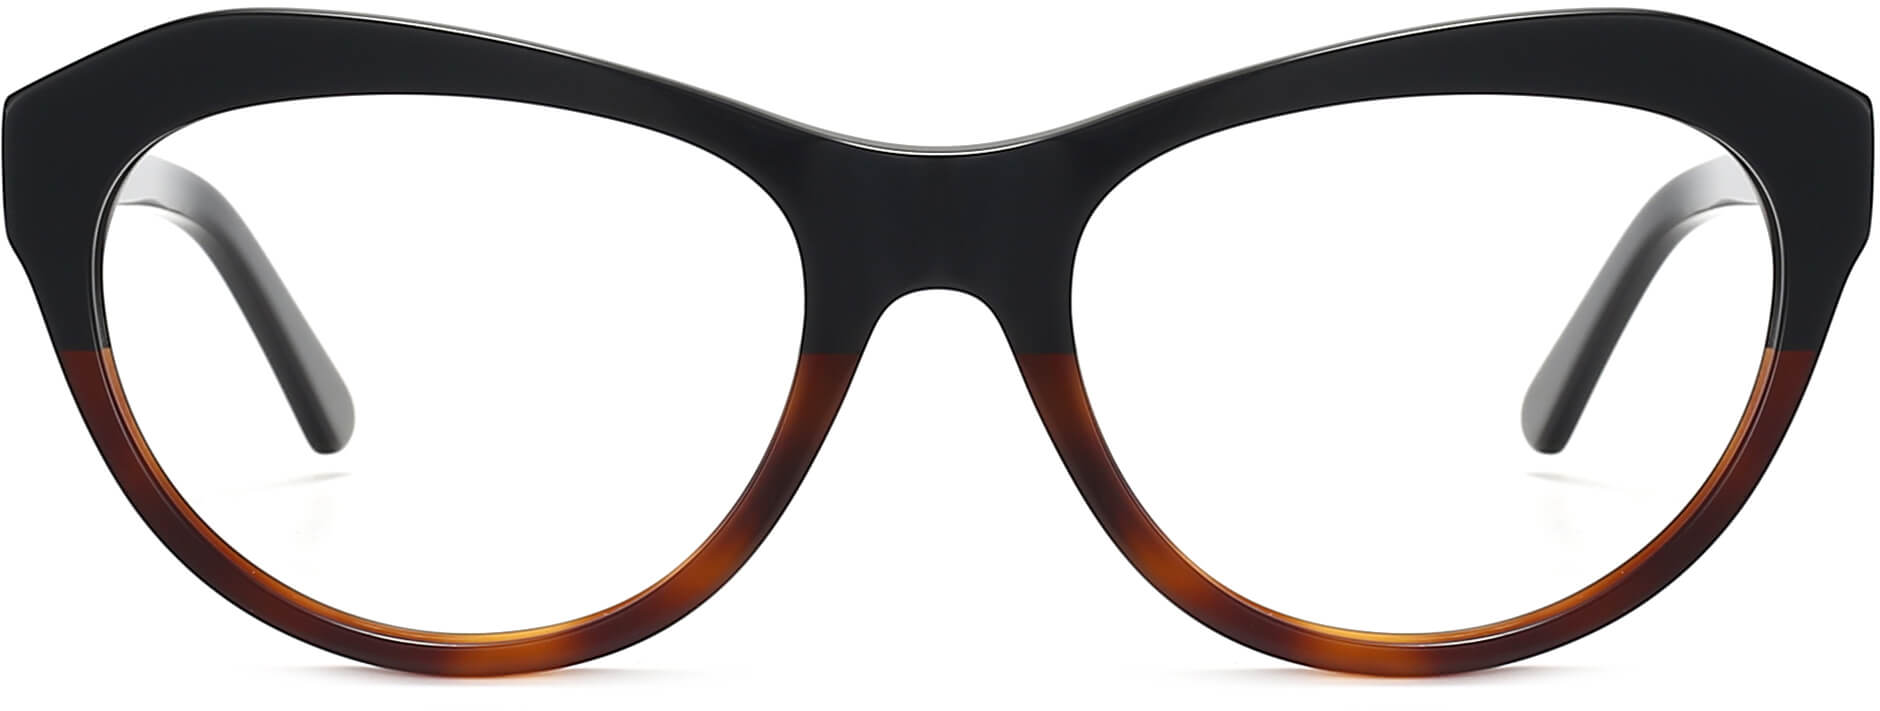 Itzayana Cateye Black Eyeglasses from ANRRI, front view